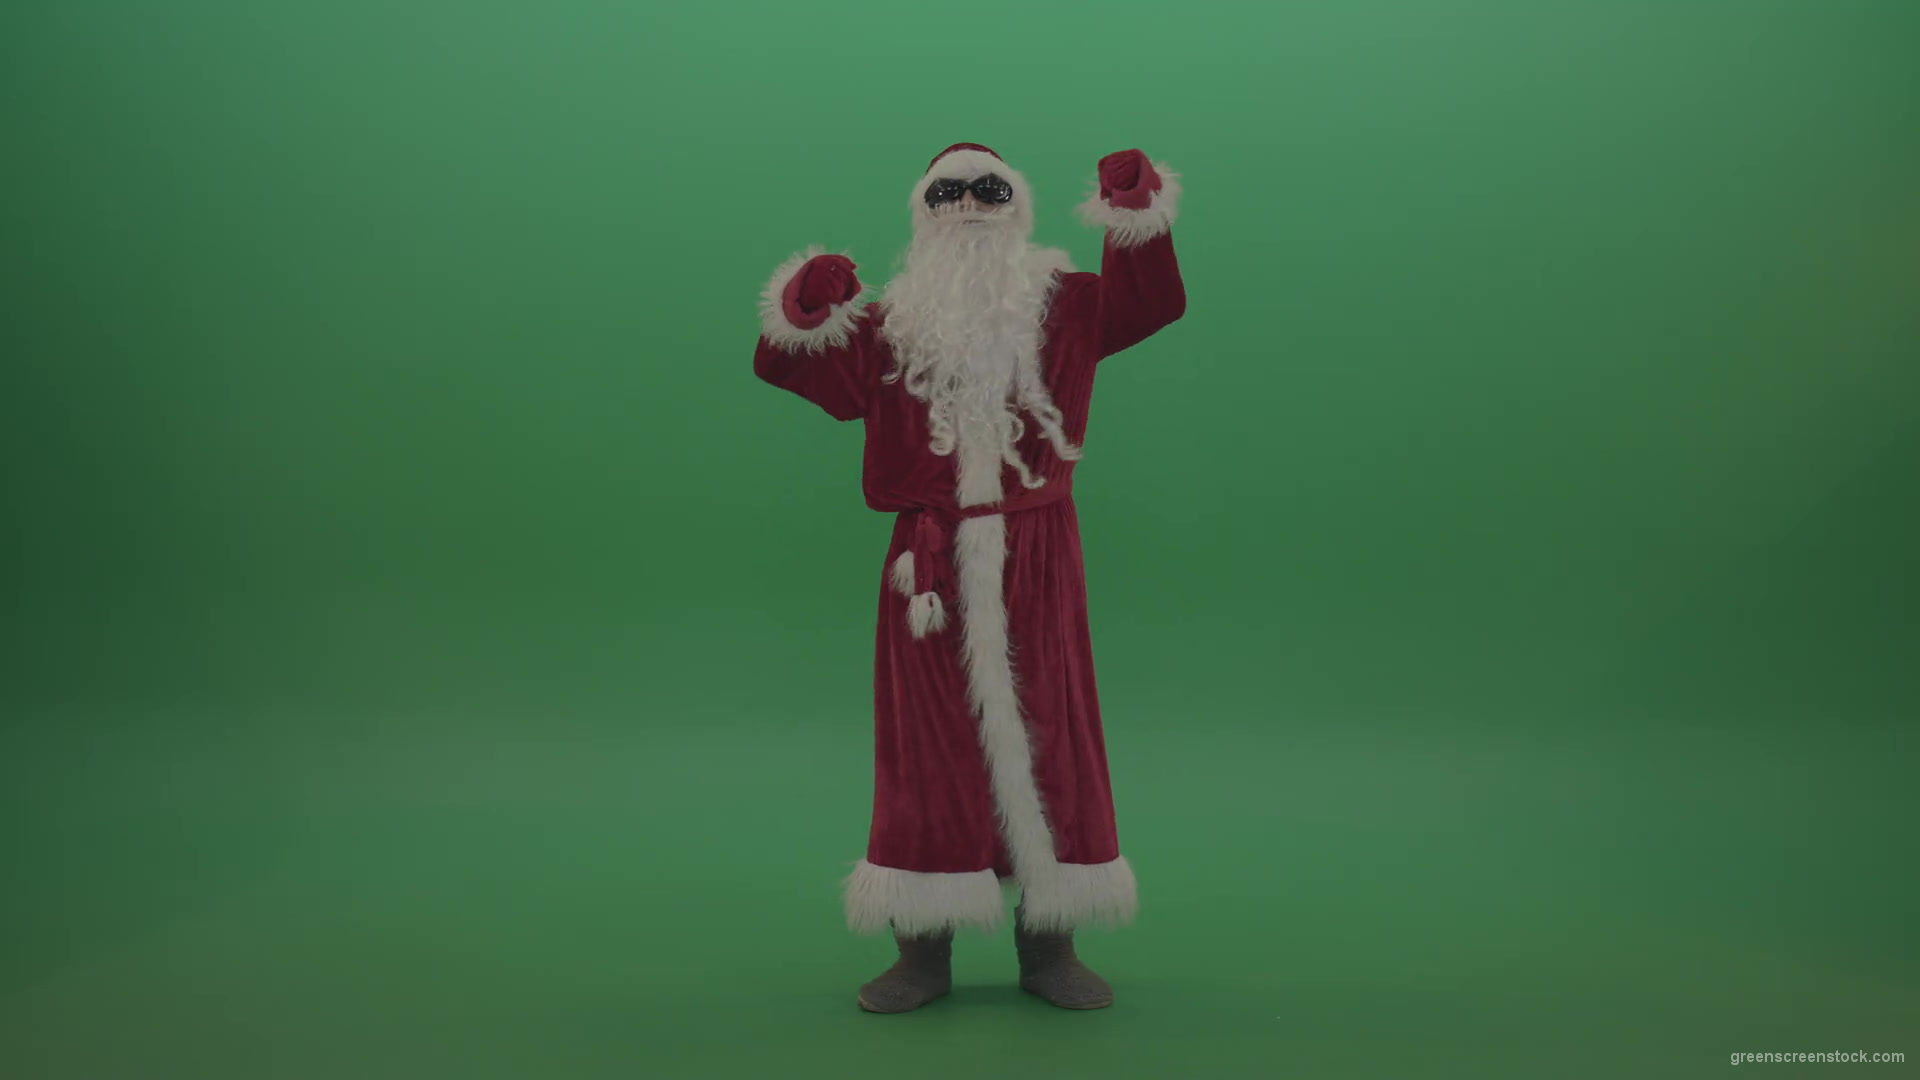 Santa-in-black-glasses-celebrates-his-victory-over-green-screen-background-1920_007 Green Screen Stock